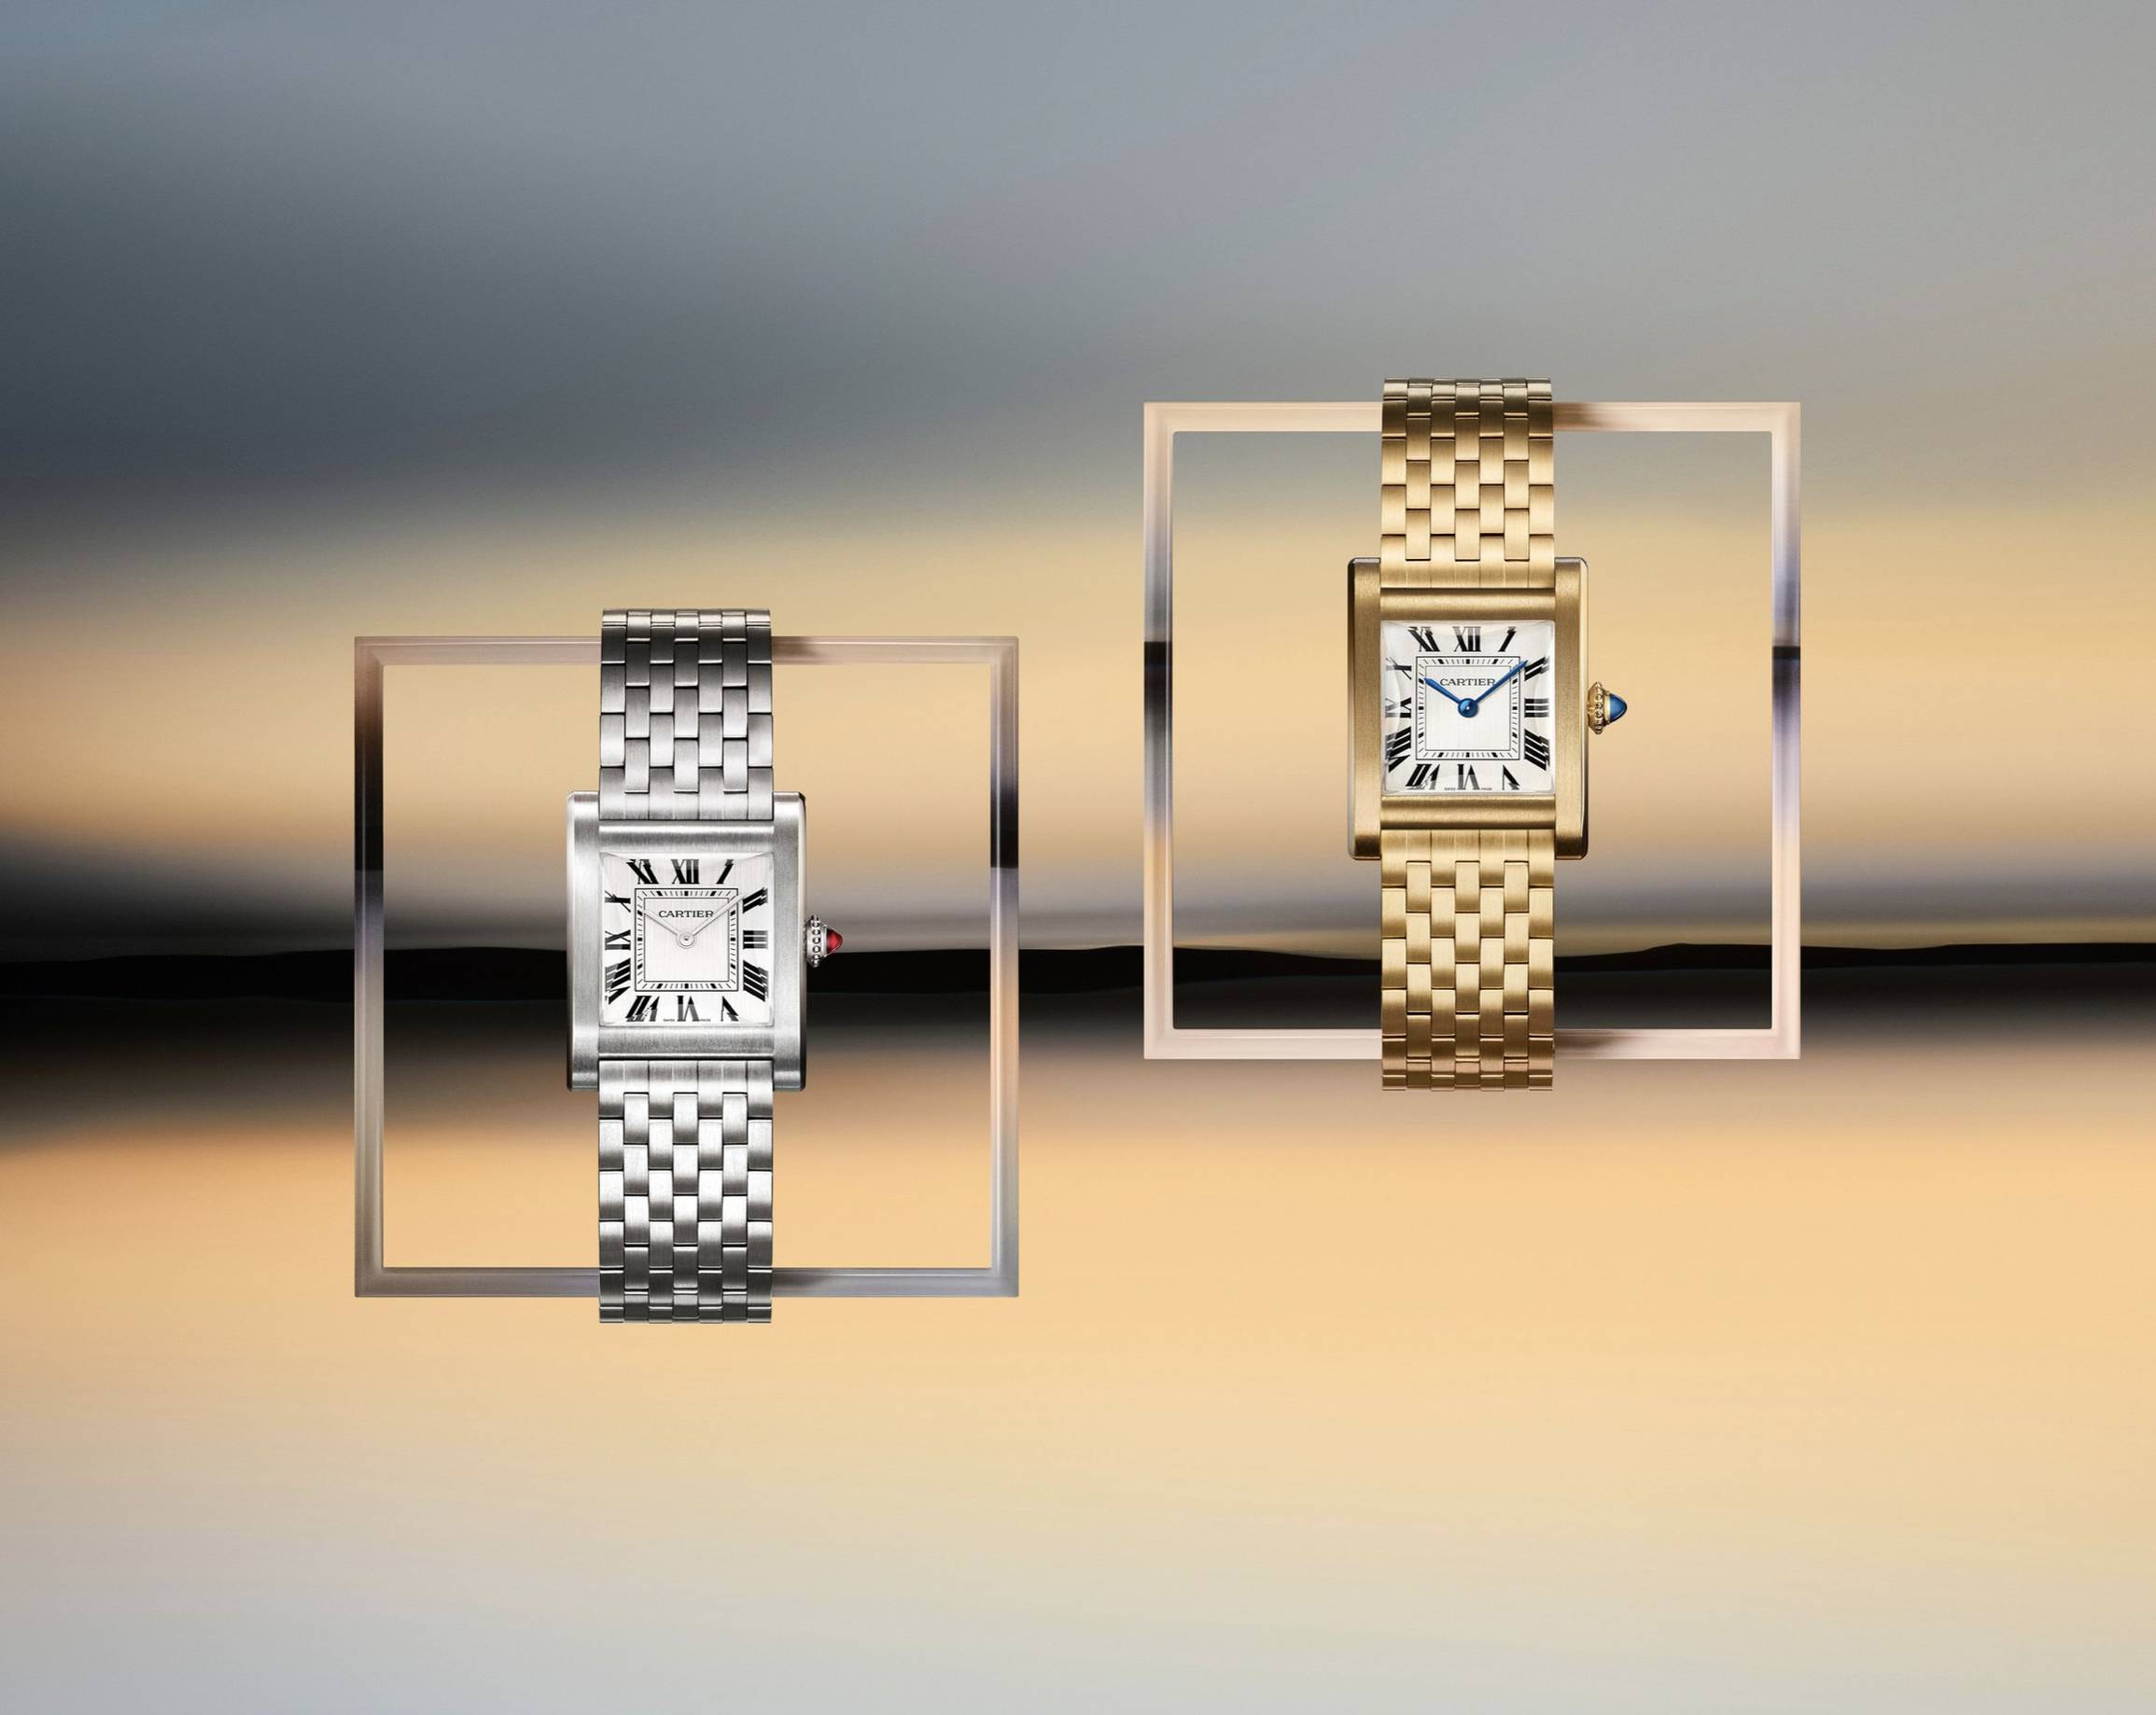 The New Tank De Cartier - Watches & Wonders 2022 - IWS